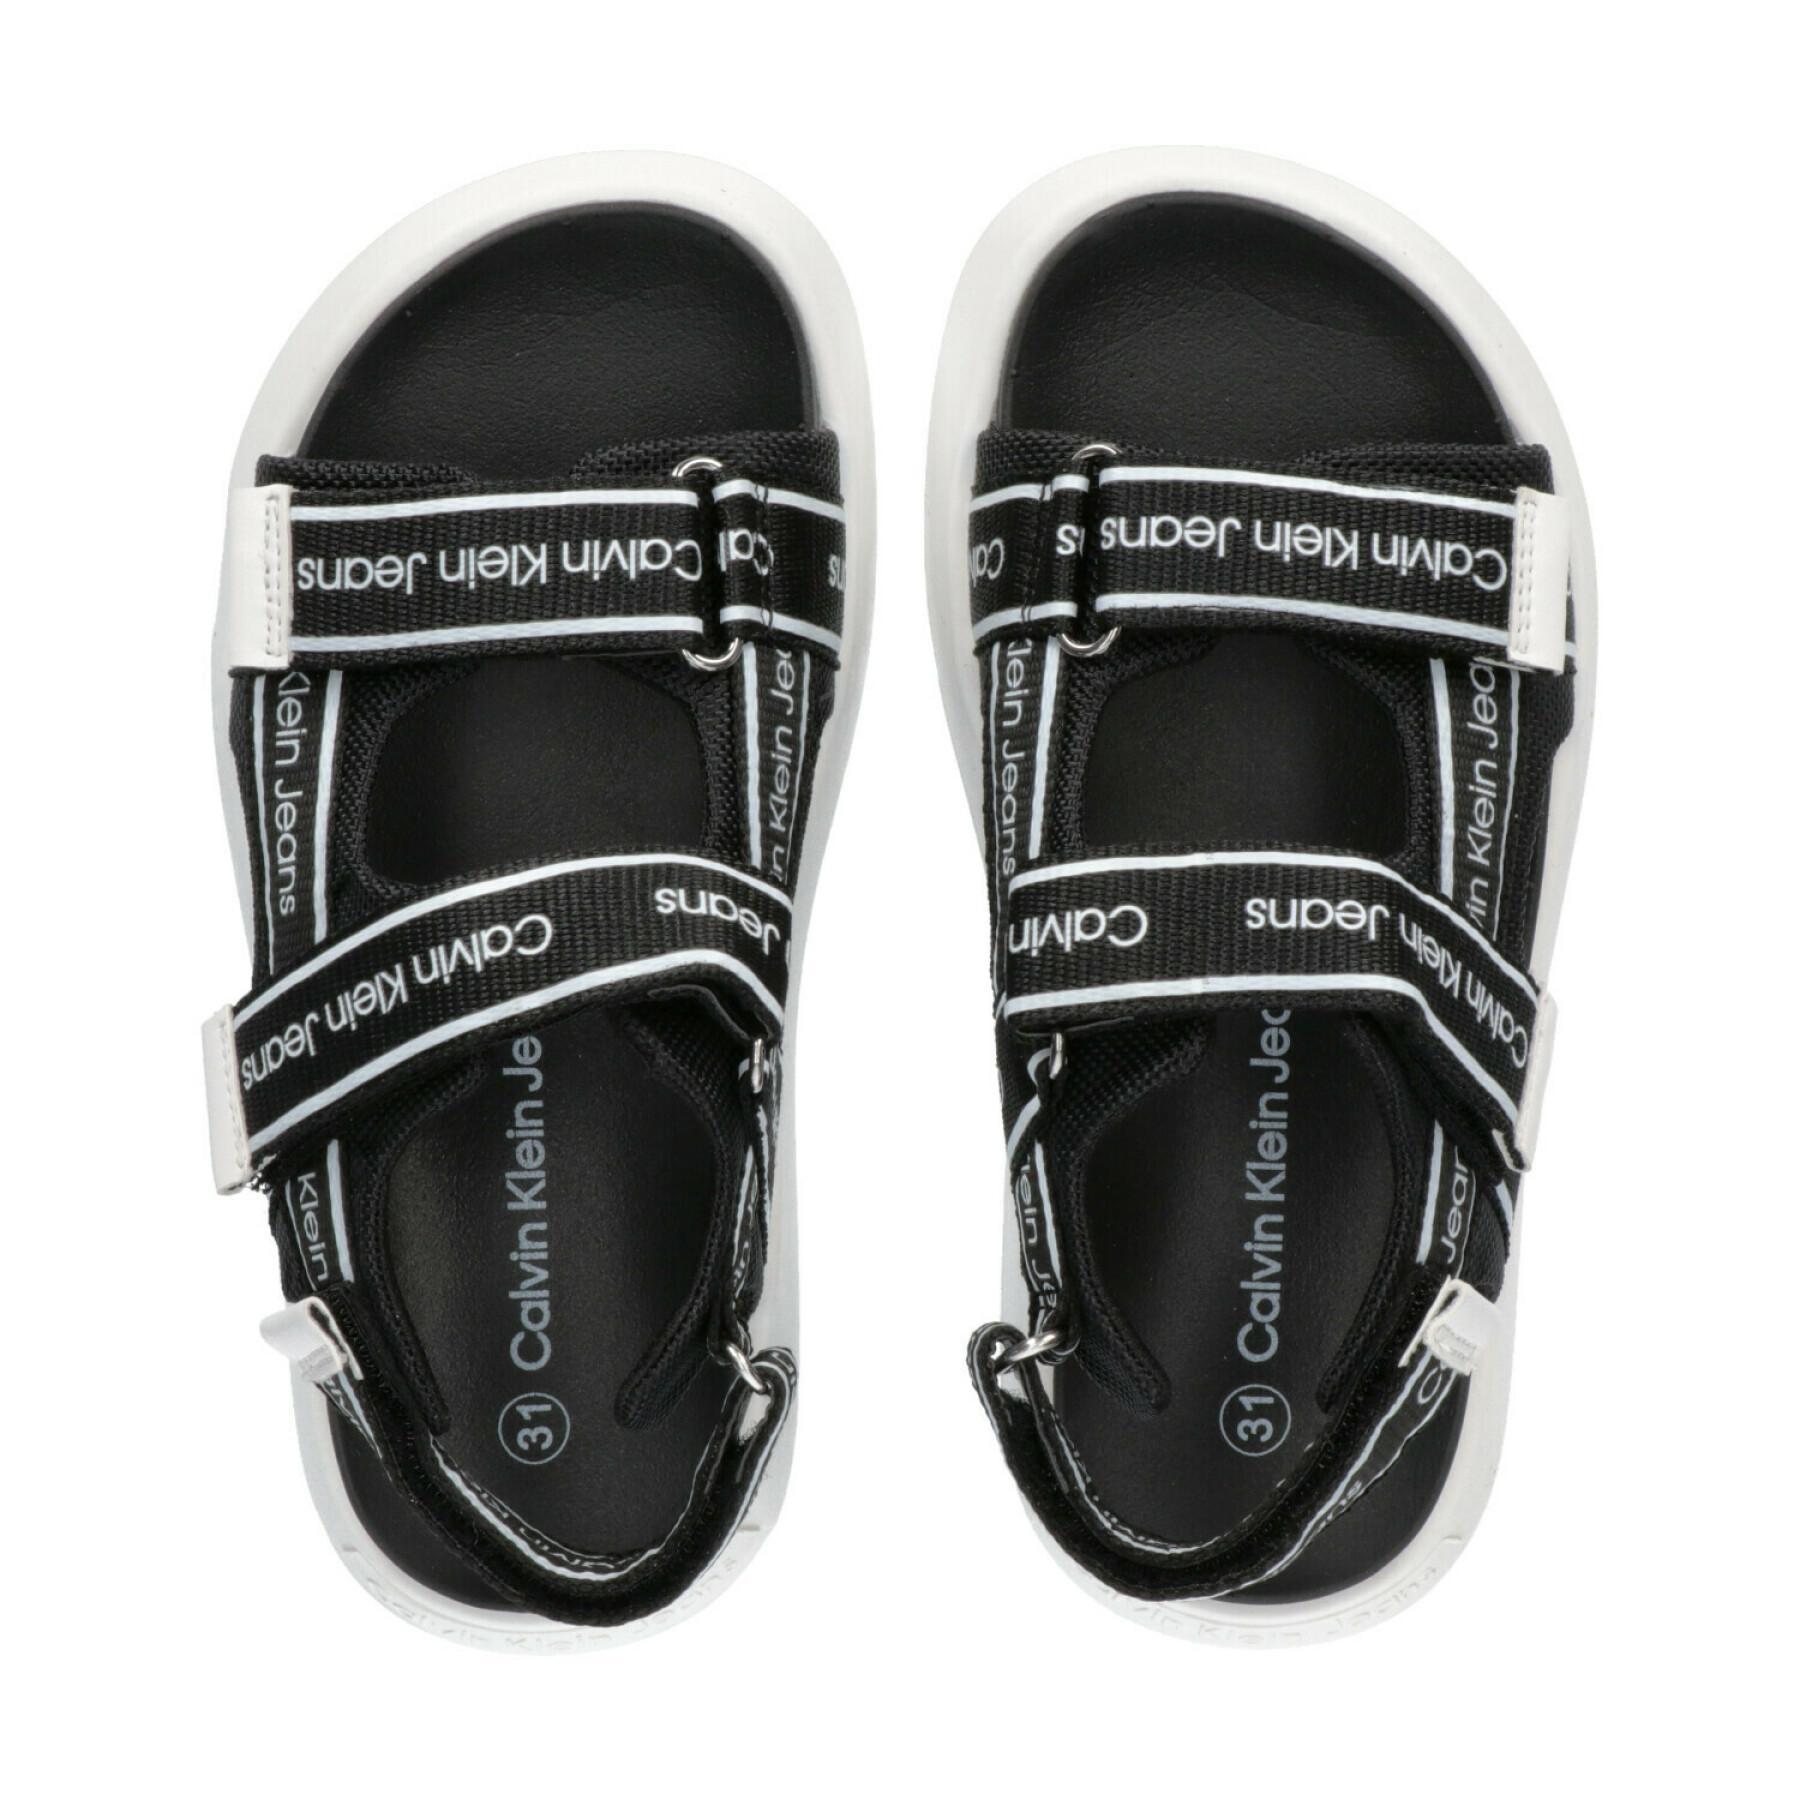 Sandalias para niños Calvin Klein Jeans Velcro